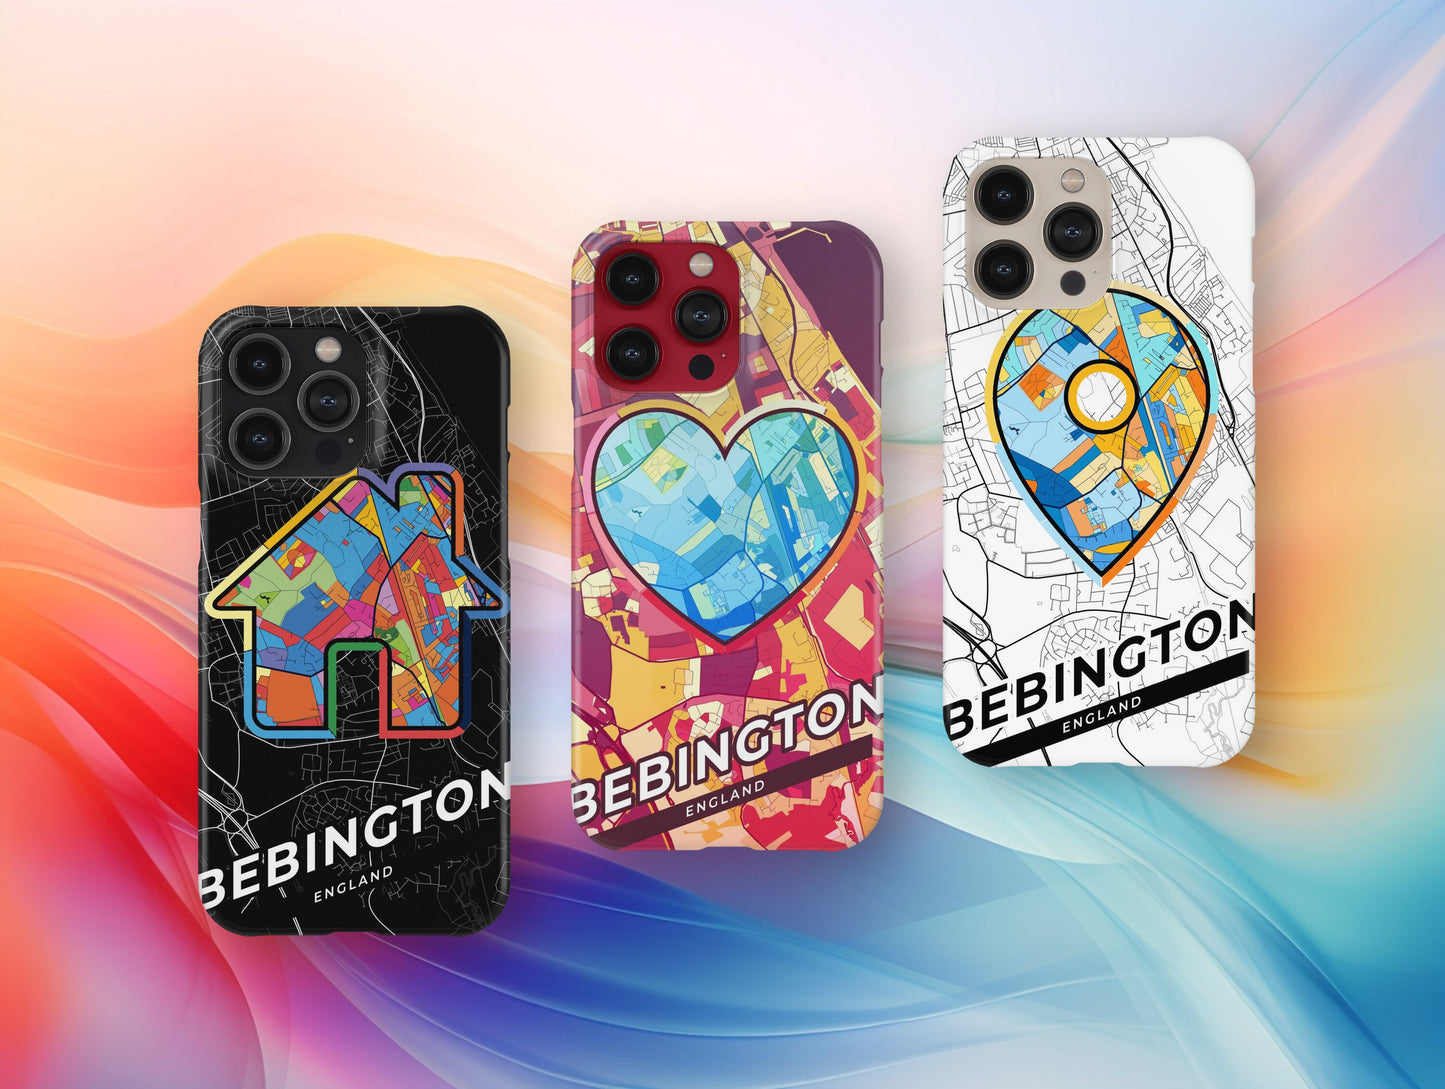 Bebington England slim phone case with colorful icon. Birthday, wedding or housewarming gift. Couple match cases.